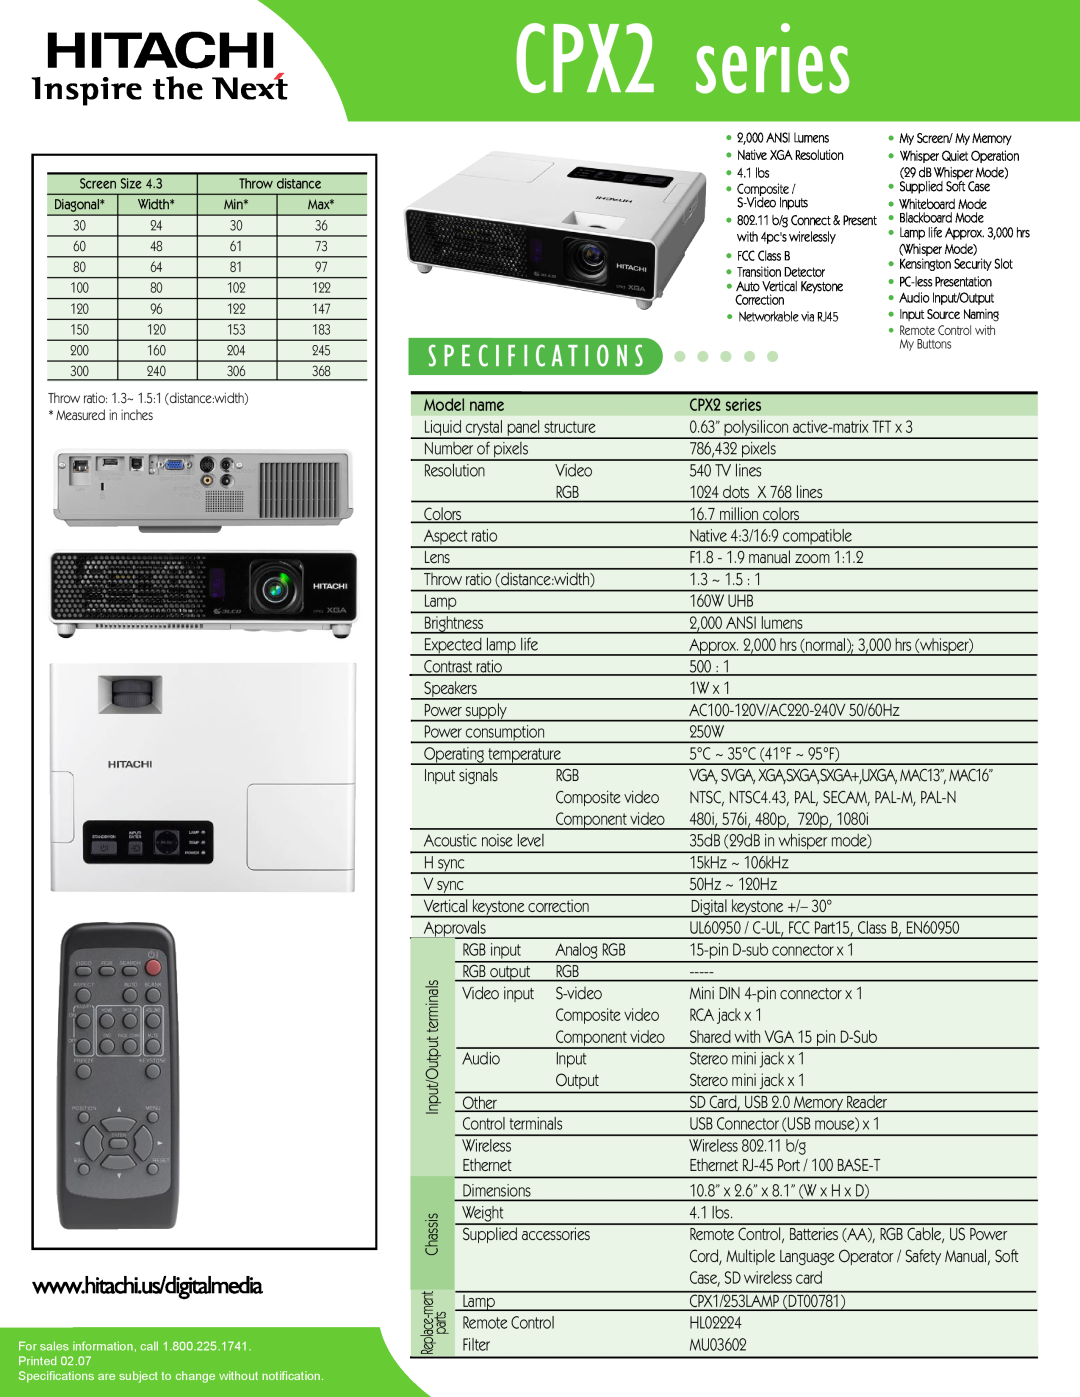 Hitachi CP-X1, CP-X253 specifications series, CPX2, S P E C I F I C A T I O N S 